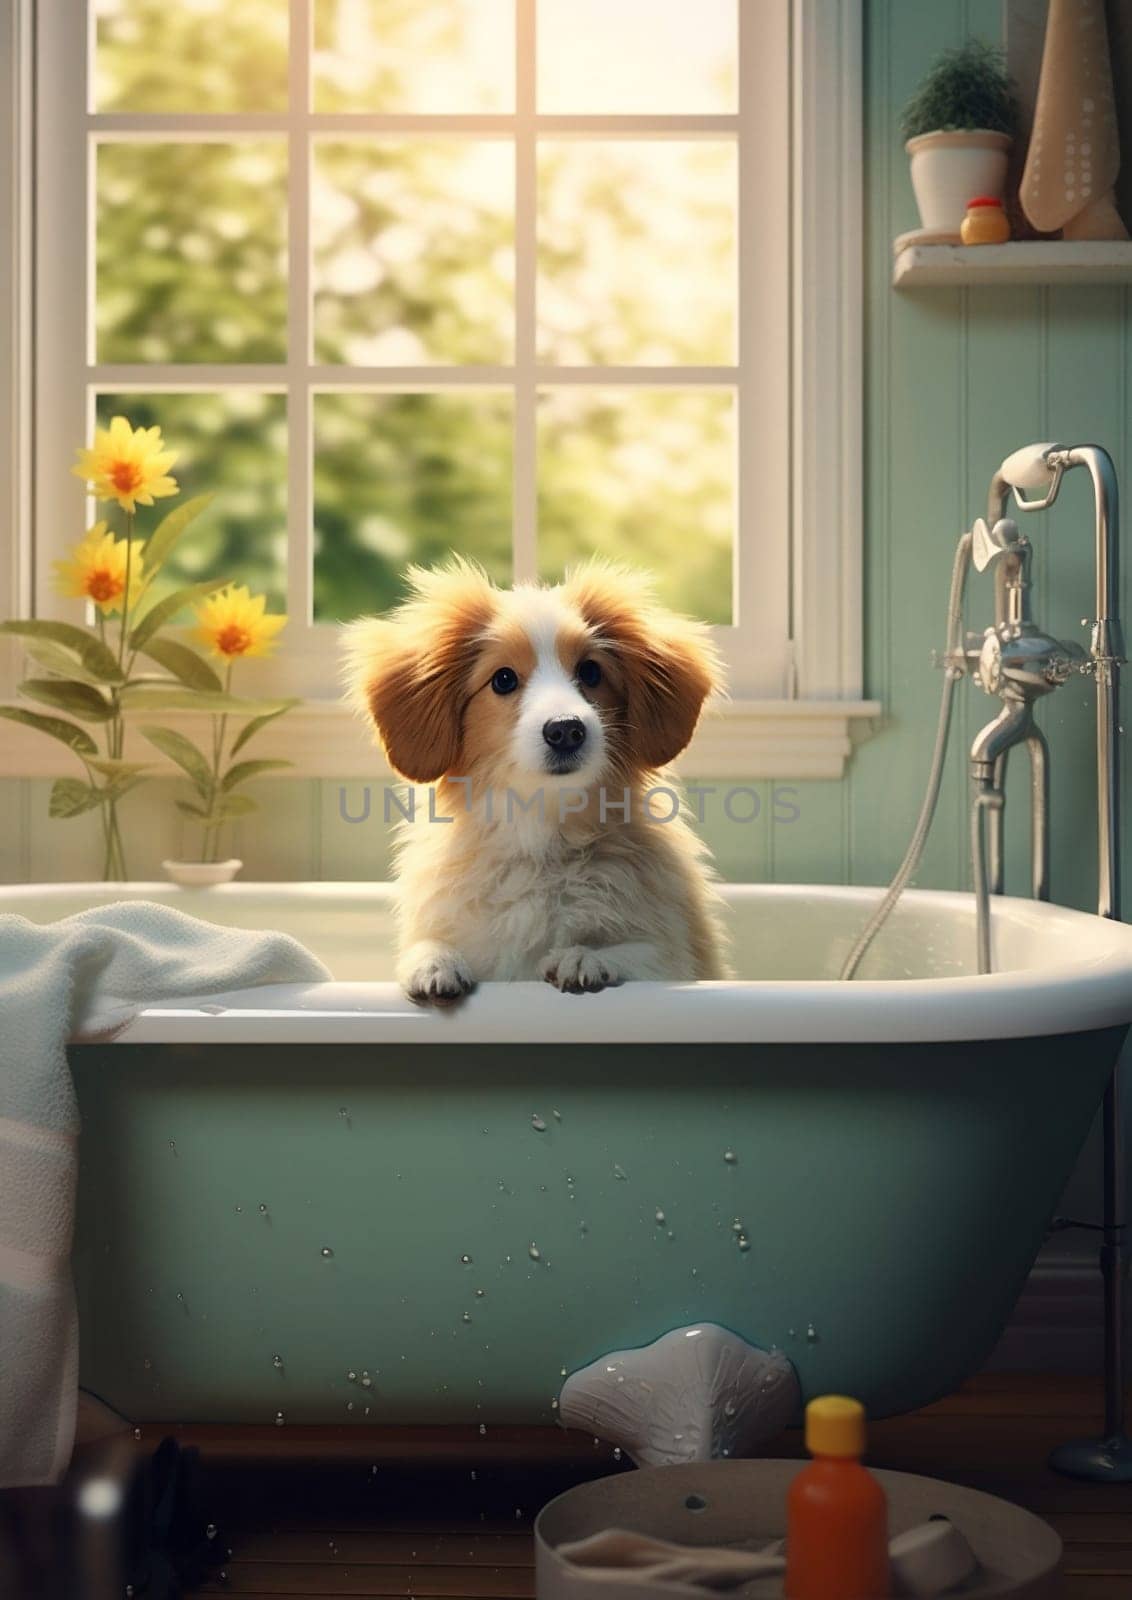 Animal dog hygiene adorable bathing shampoo cute bathtub tub wash puppy clean shower wet pets friend water grooming bathroom indoor funny home